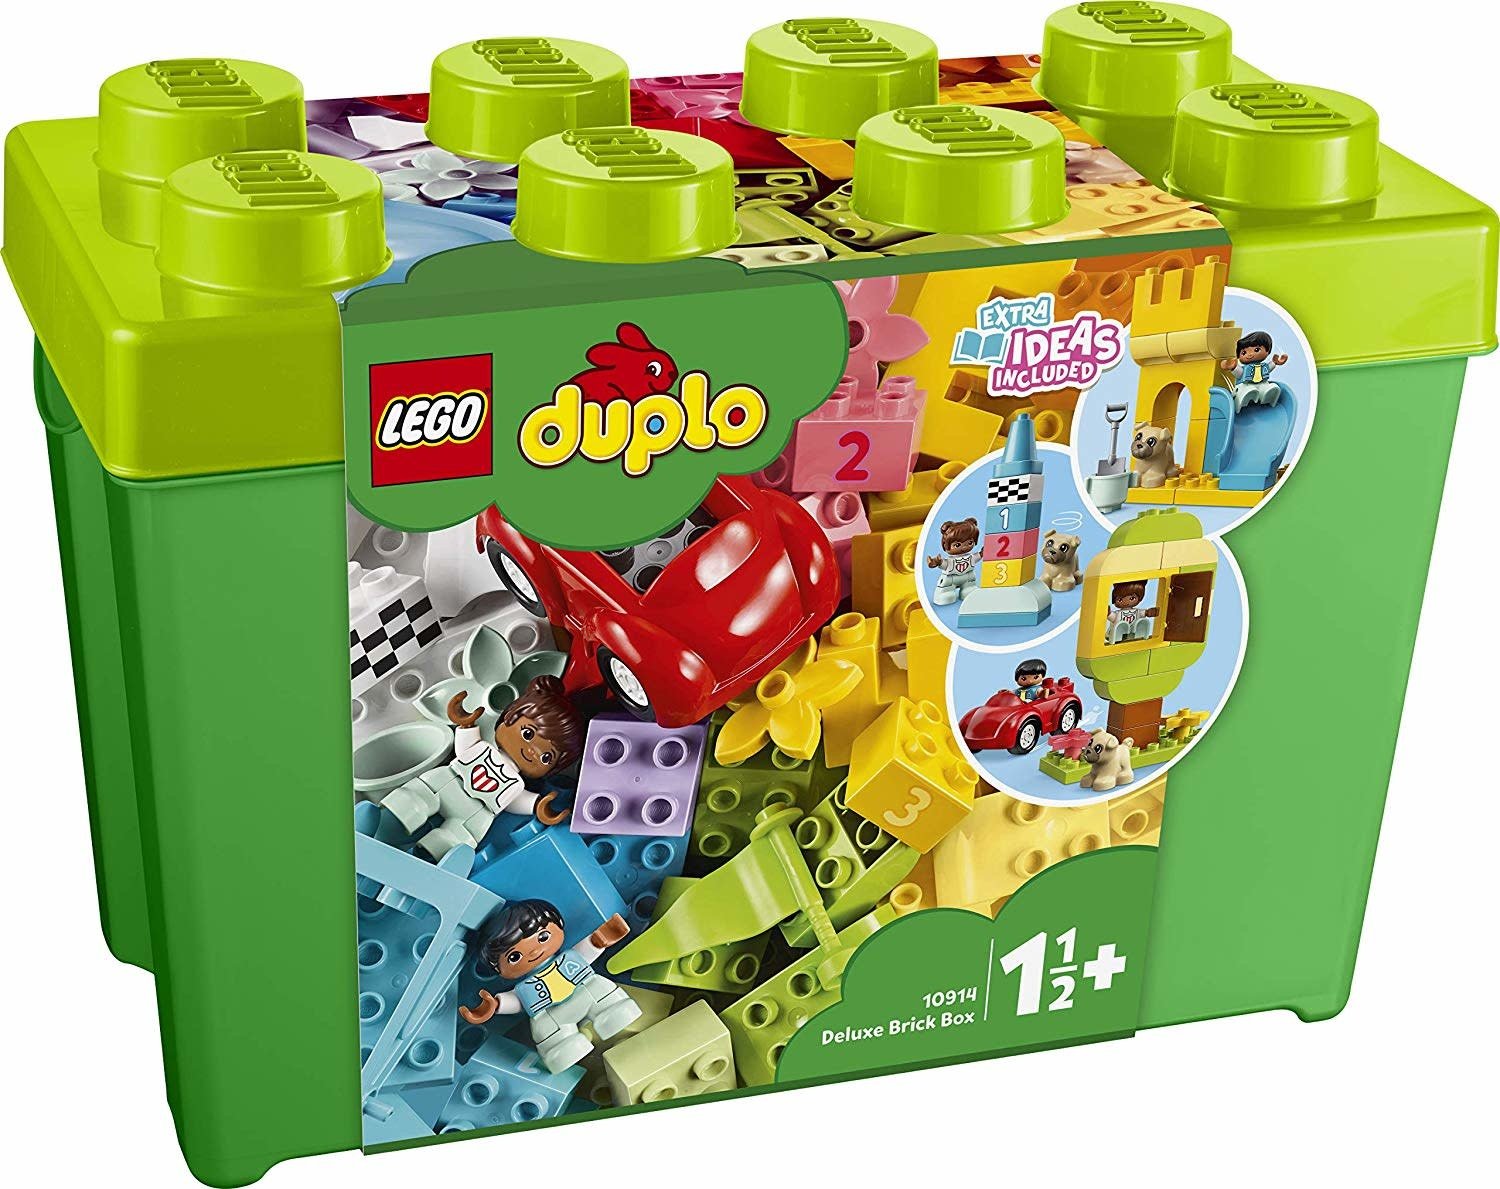 10914 Deluxe Brick Box by LEGO Duplo